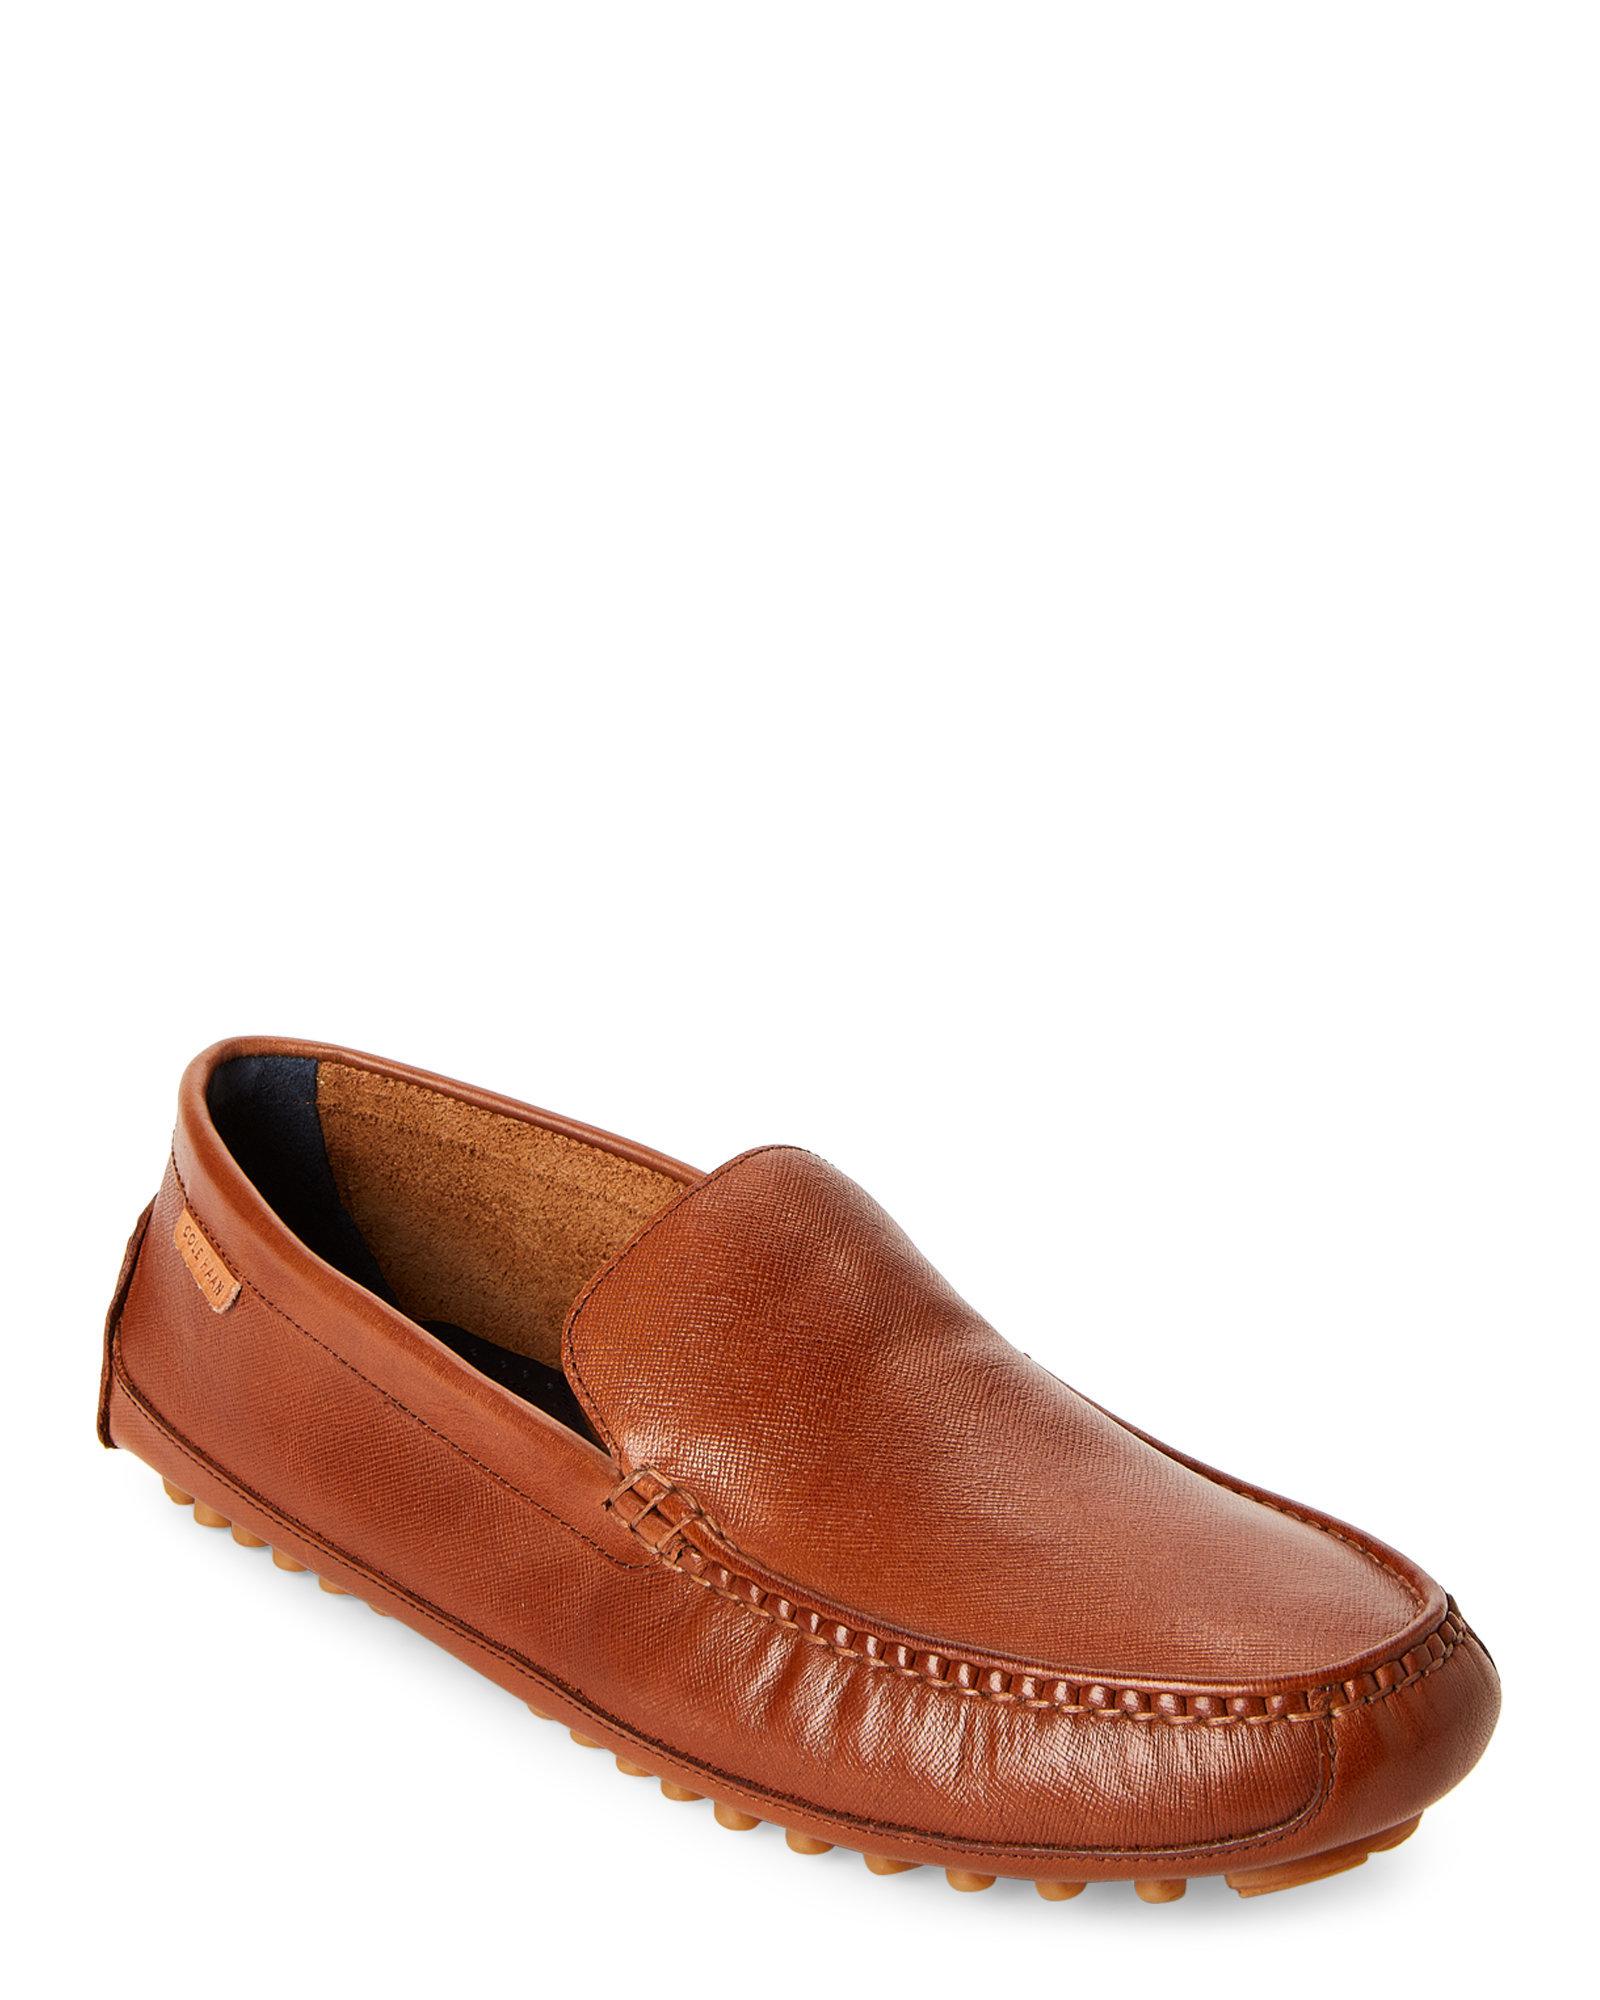 Cole Haan Leather British Tan Coburn Venetian Driving Loafers in Brown ...